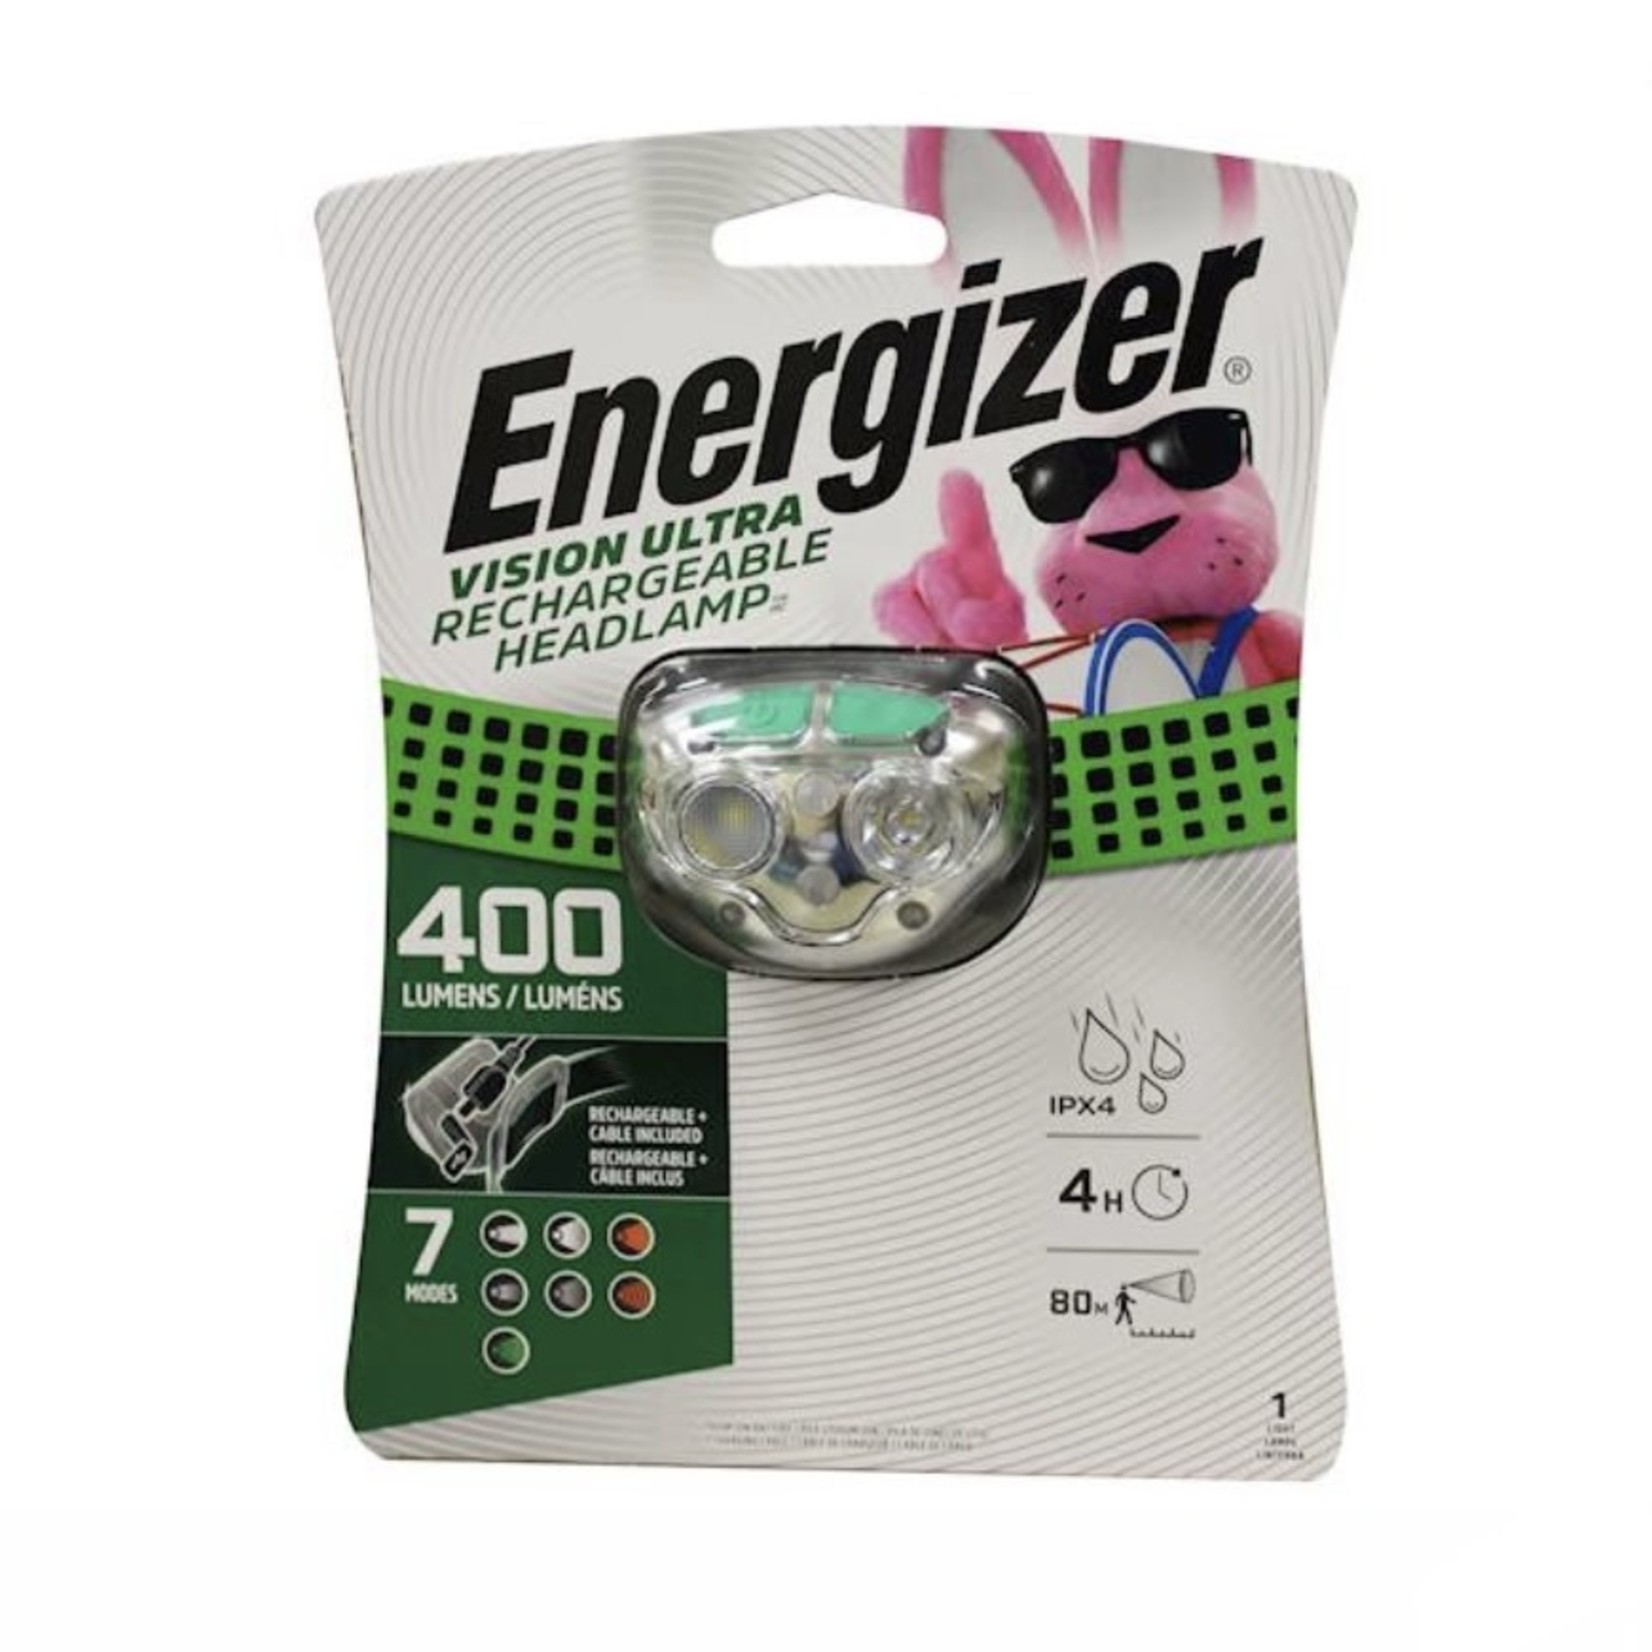 Energizer Energizer Vision Ultra HD 400 Lumen headlamp, rechargeable